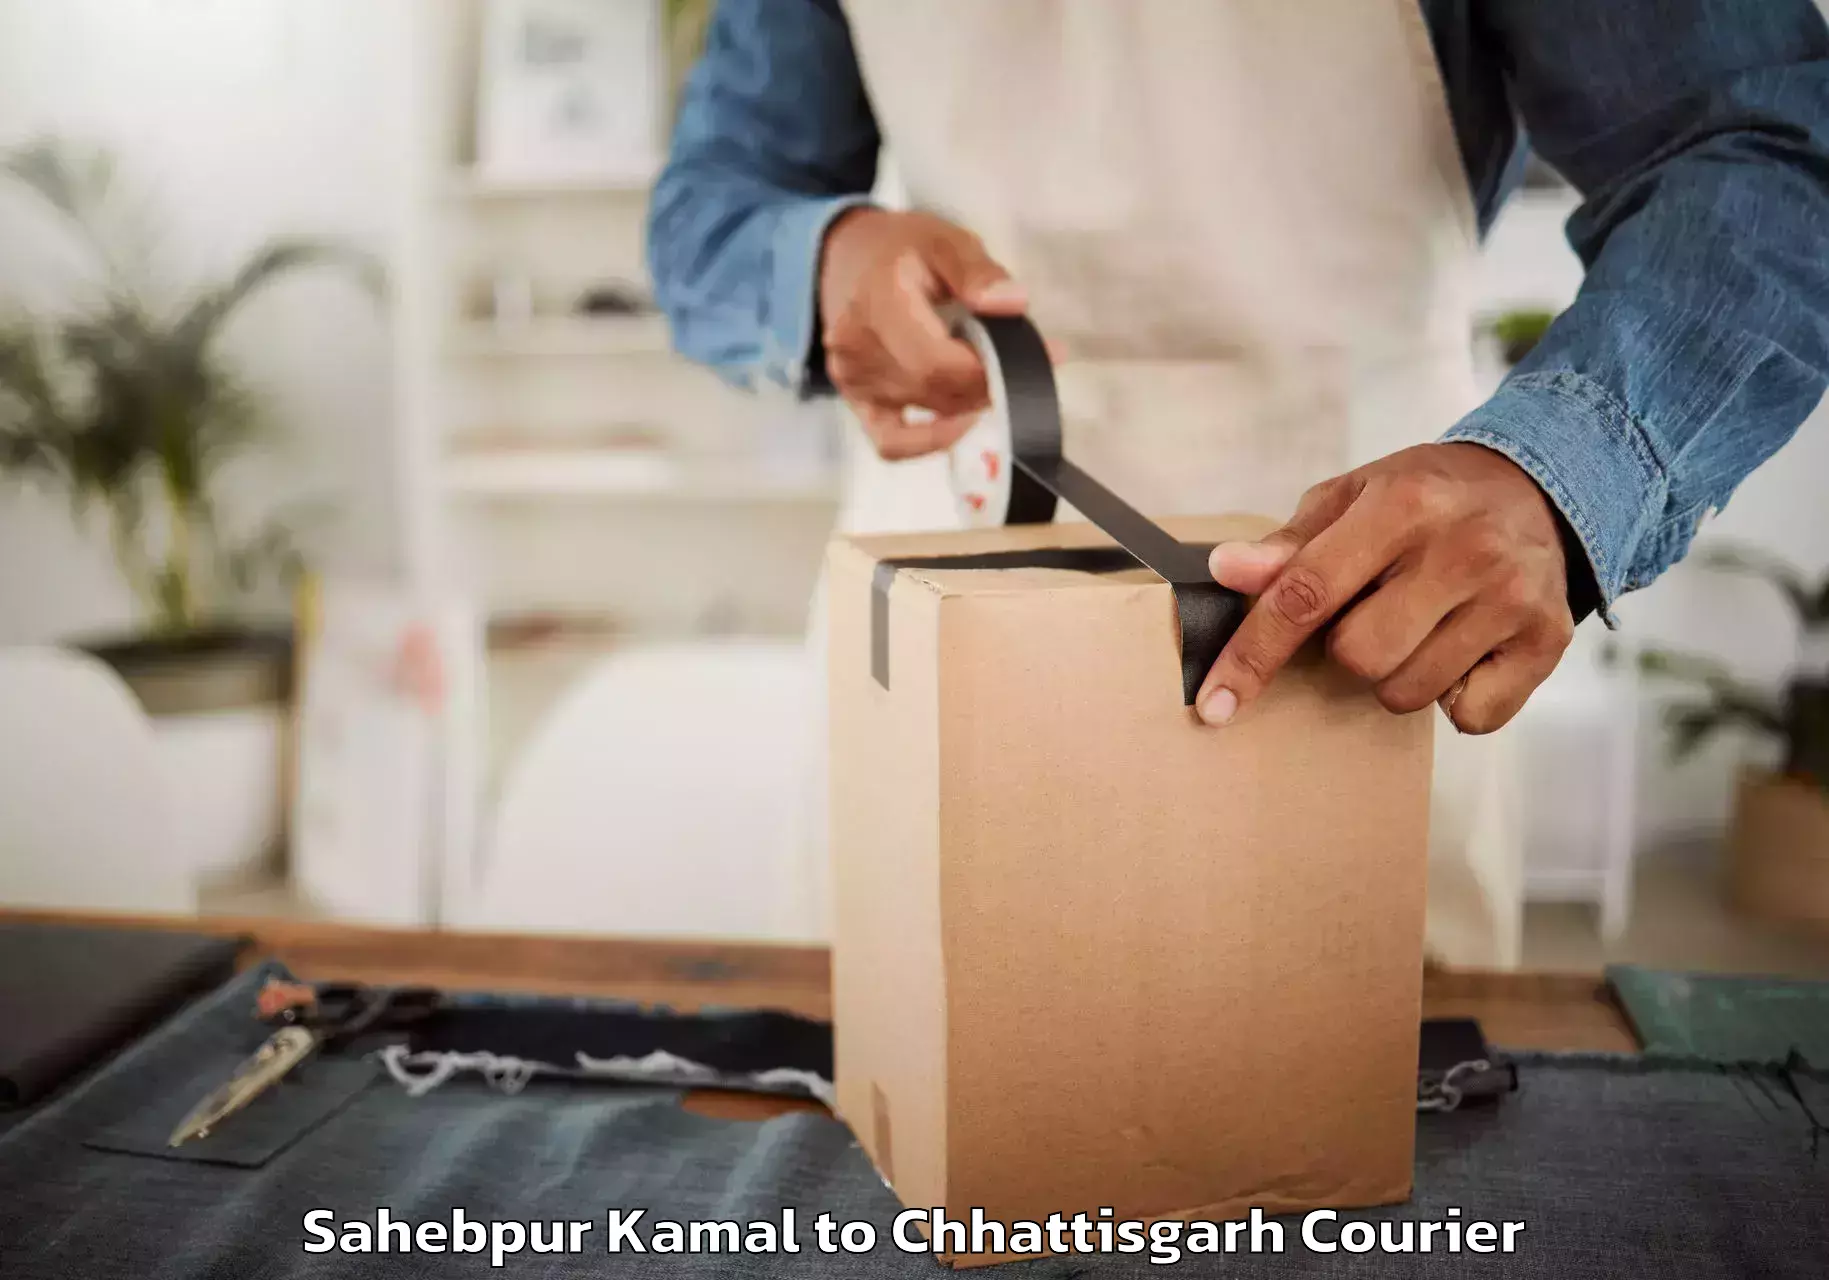 Skilled furniture transporters Sahebpur Kamal to Bijapur Chhattisgarh